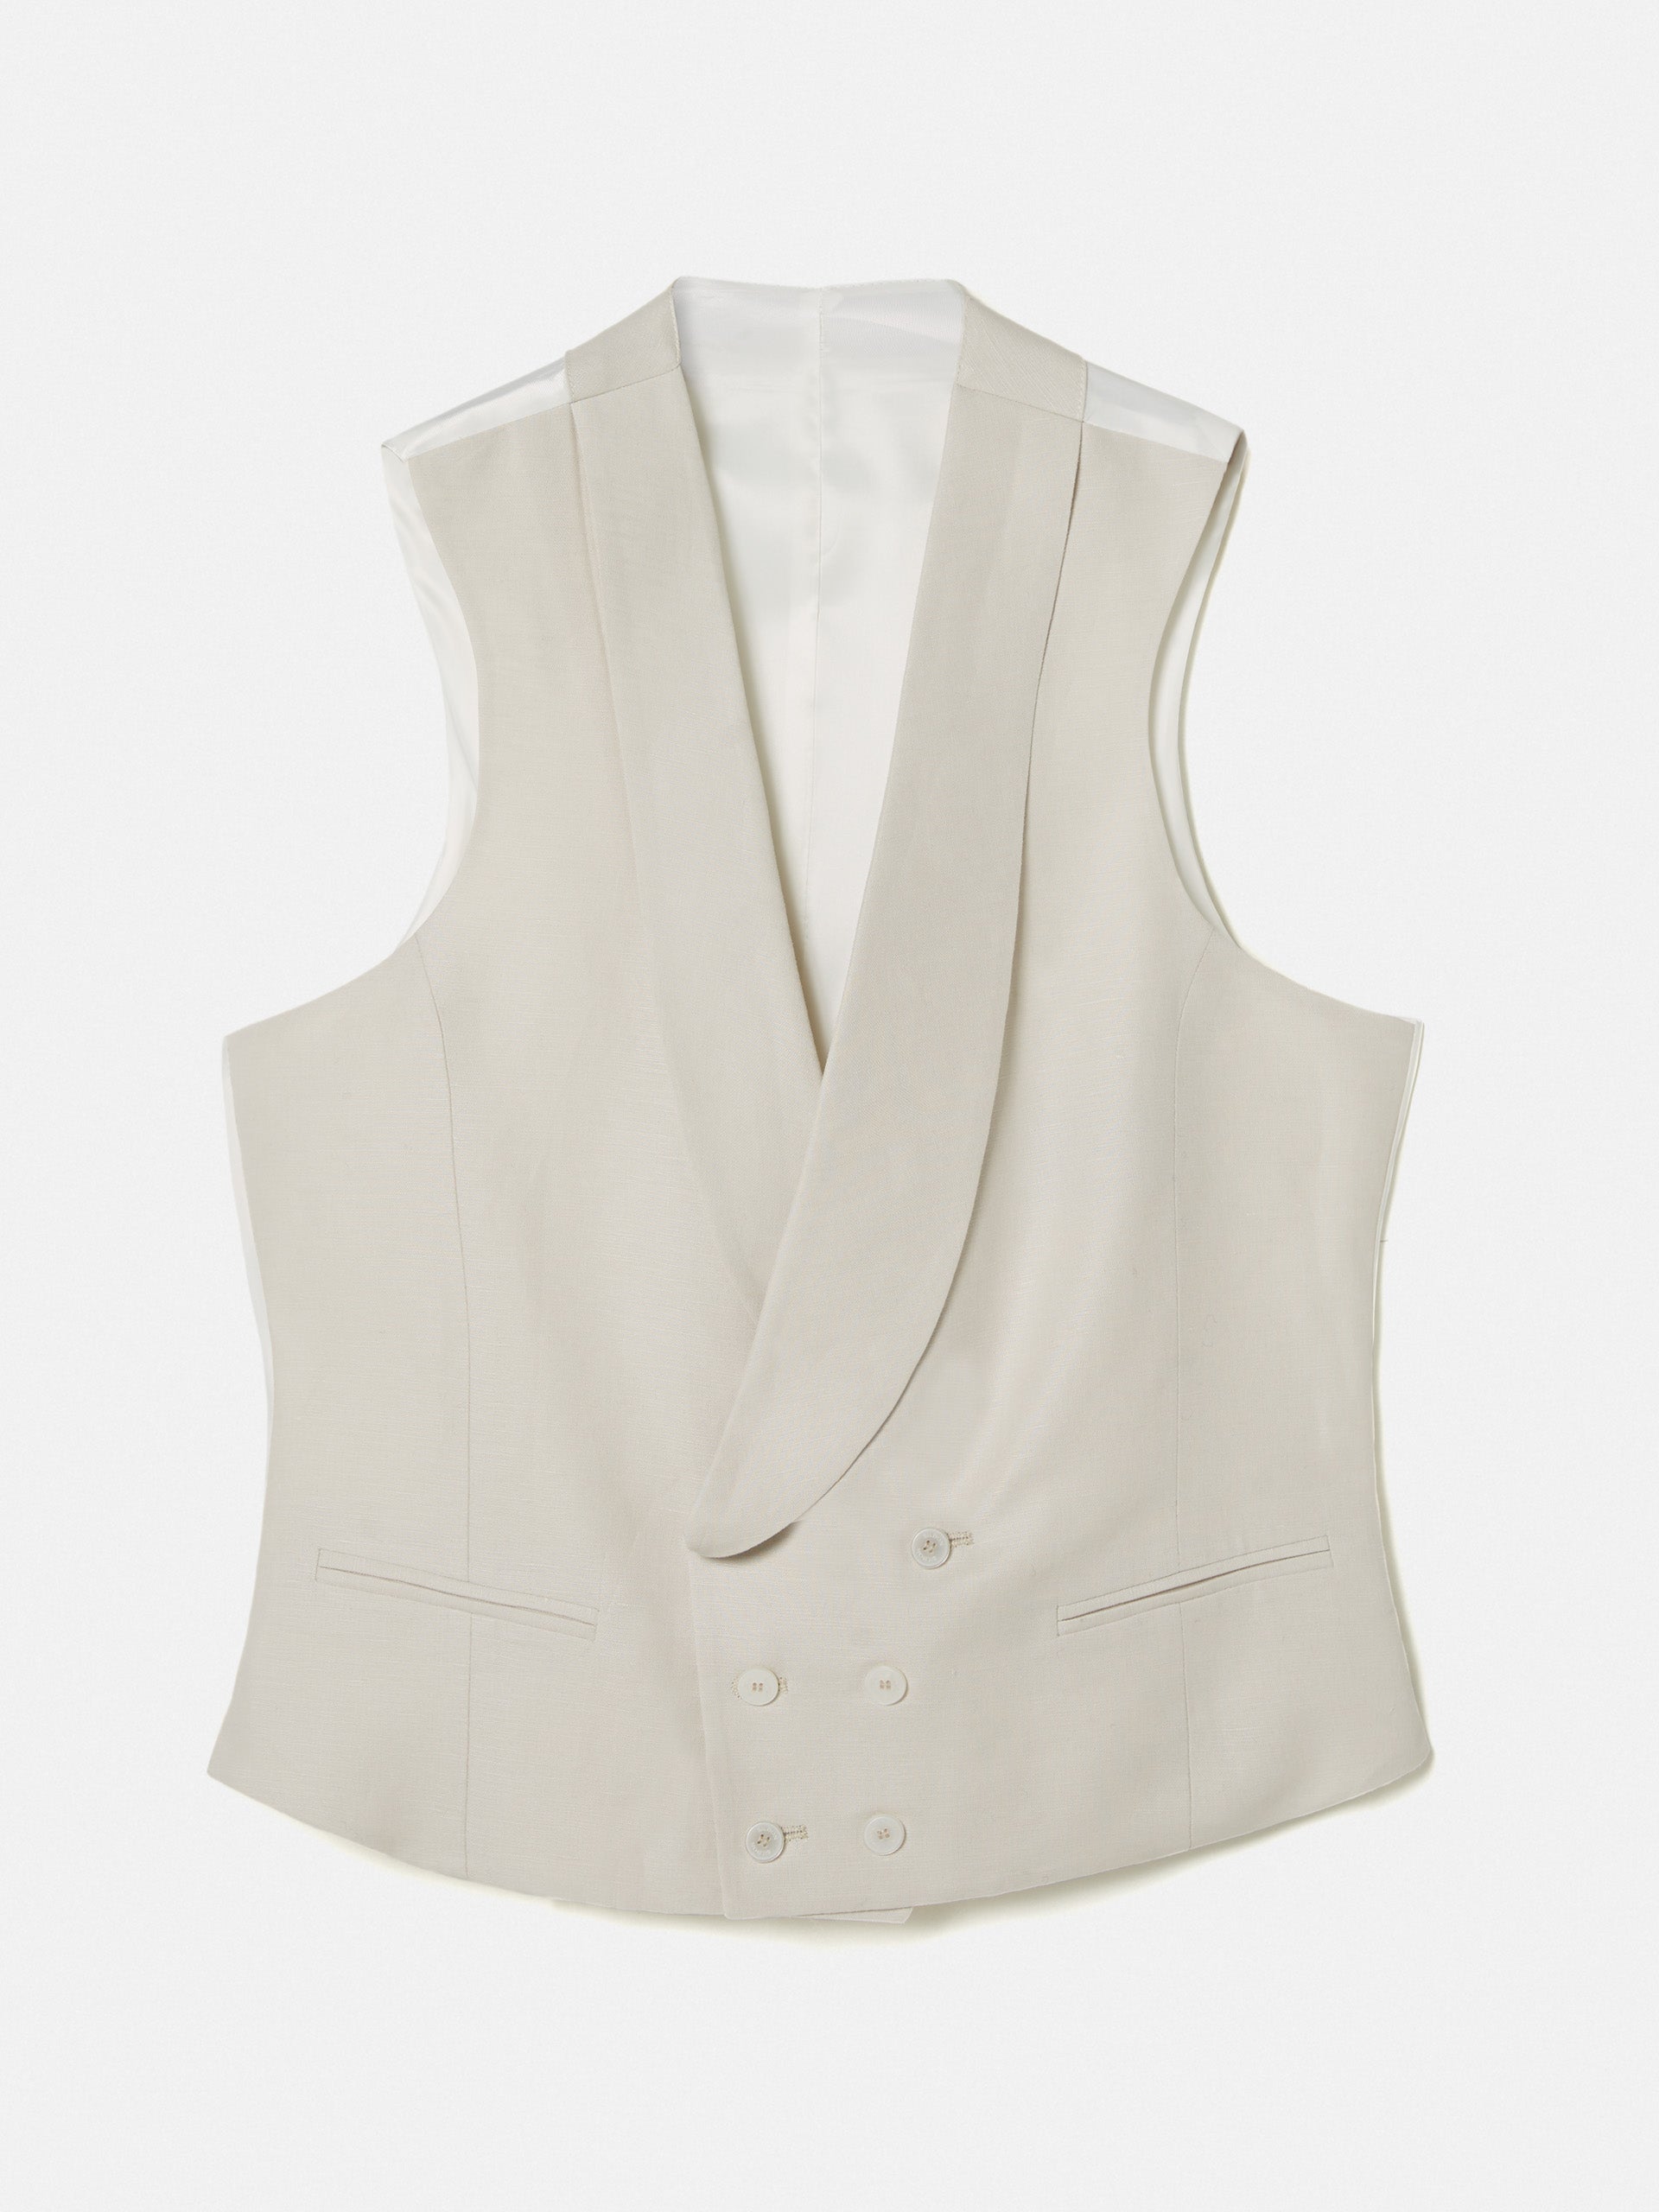 Pearl gray round neck jacket vest